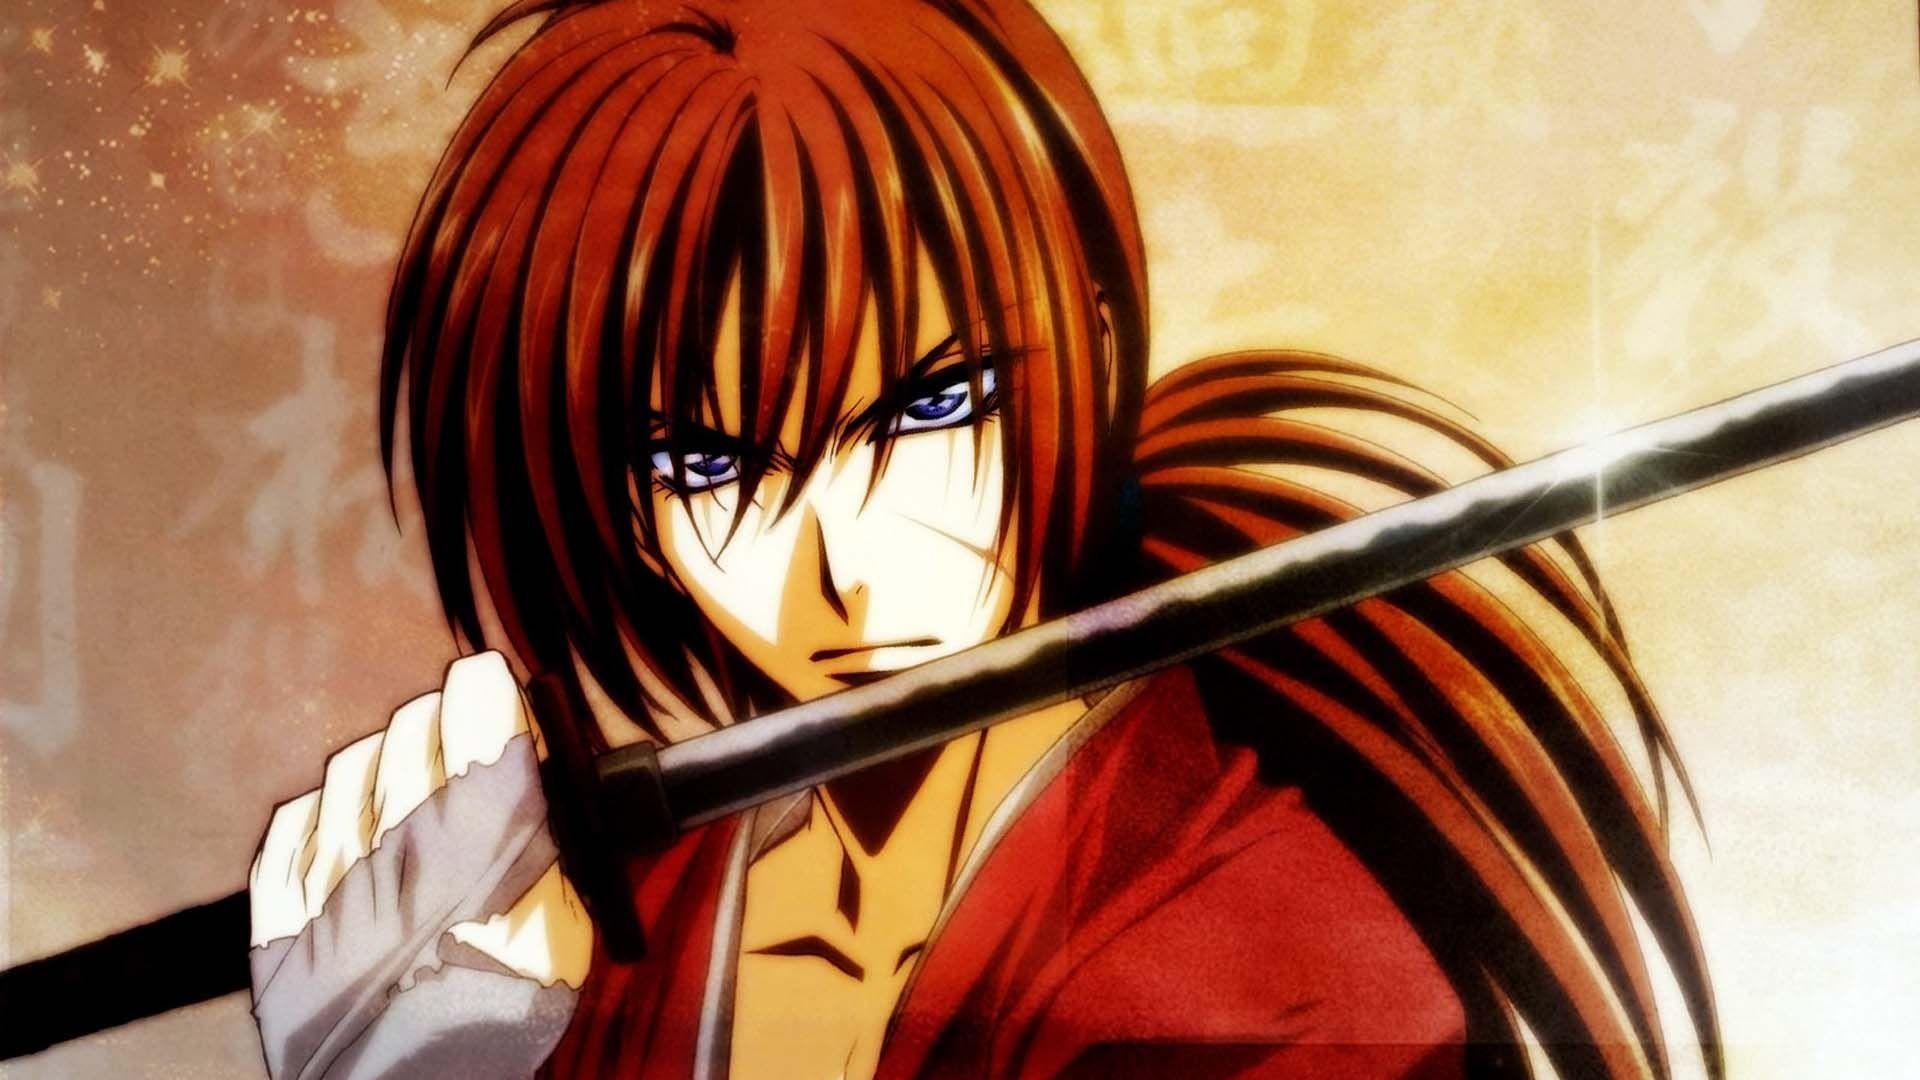 Rurouni Kenshin Anime Wallpapers Top Free Rurouni Kenshin Anime Backgrounds Wallpaperaccess 